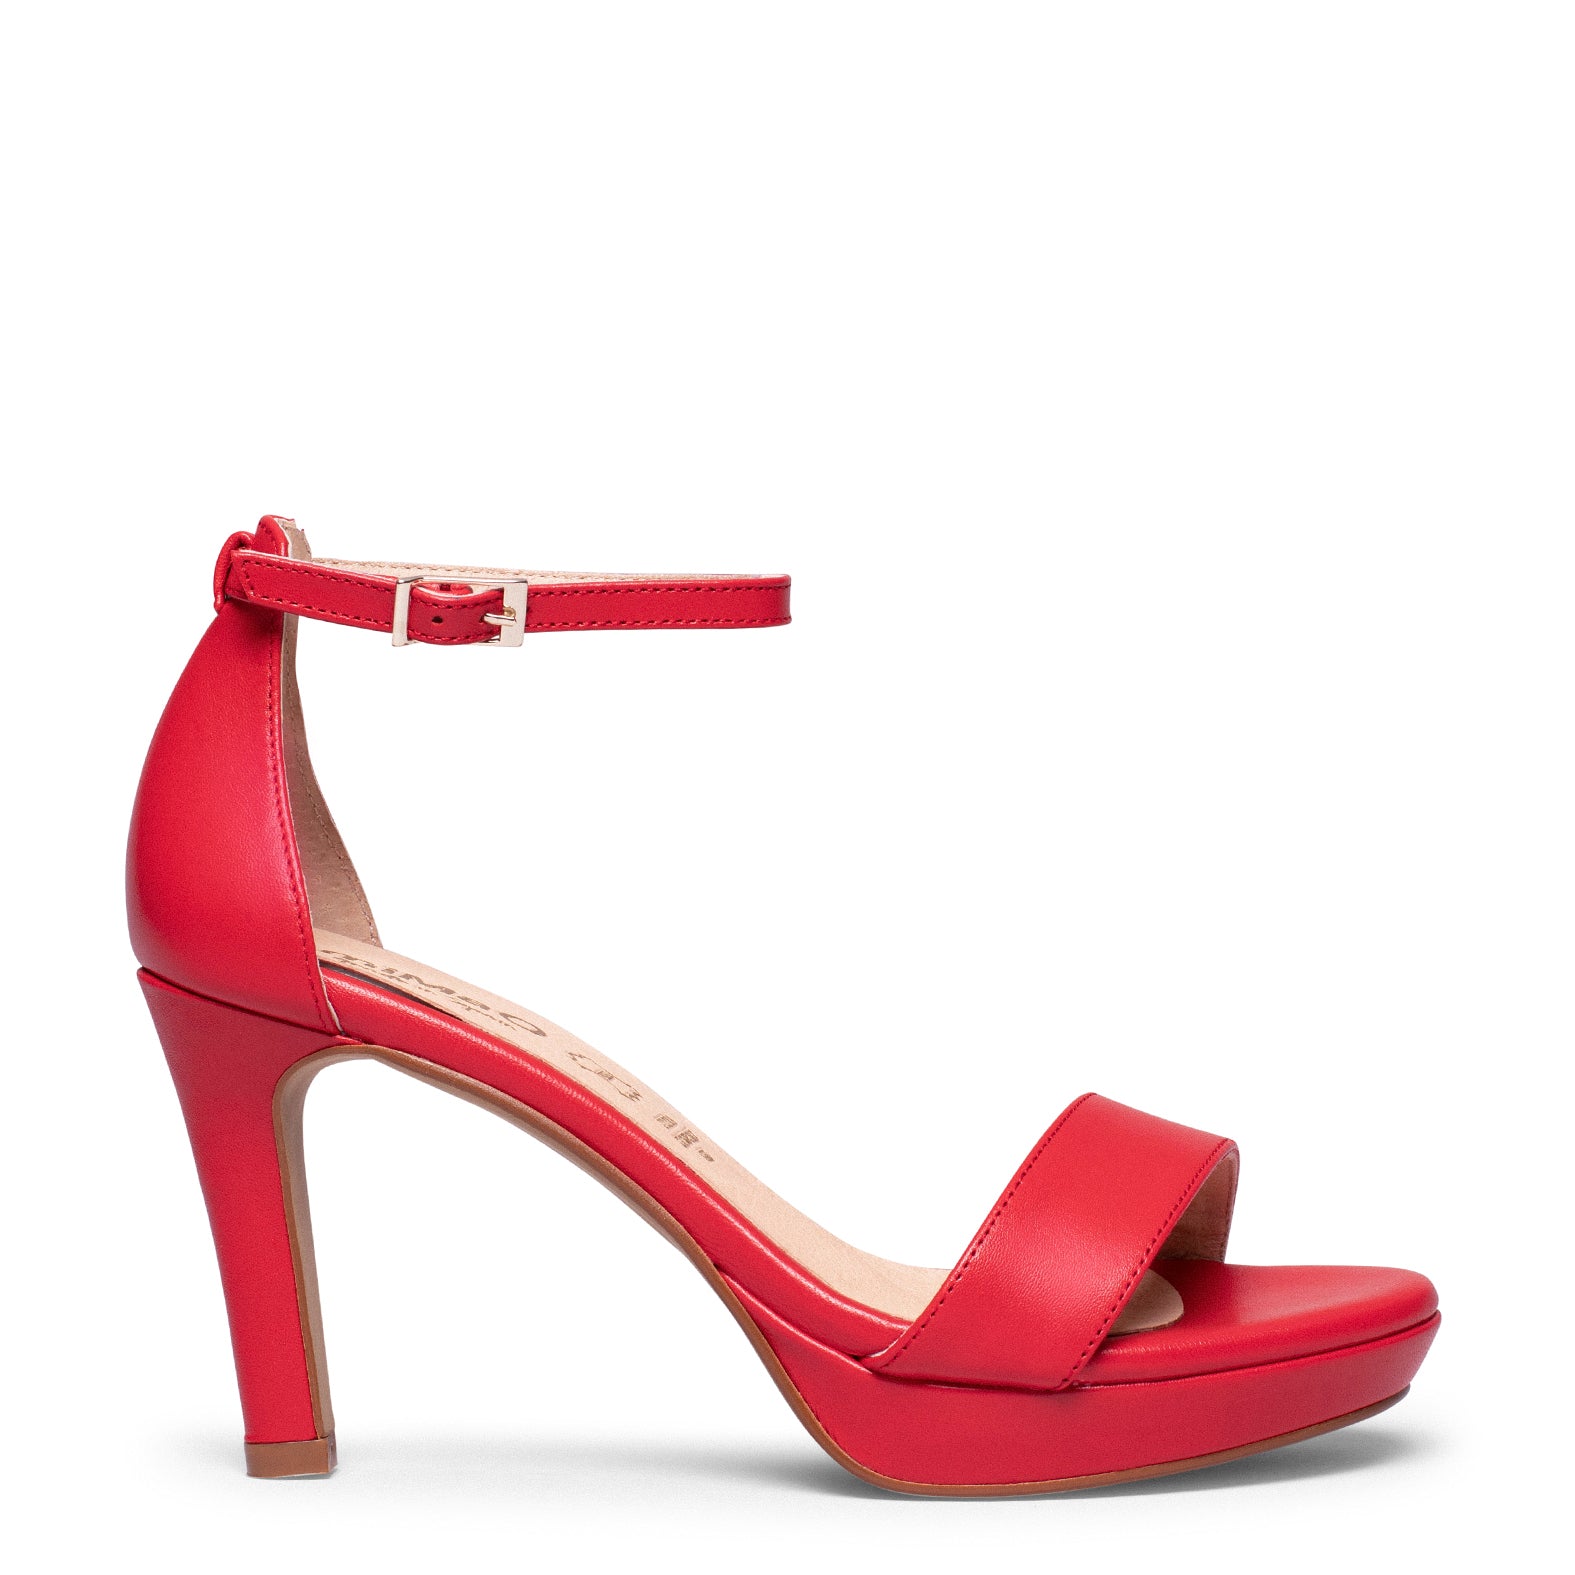 PARTY – RED high-heeled platform sandals